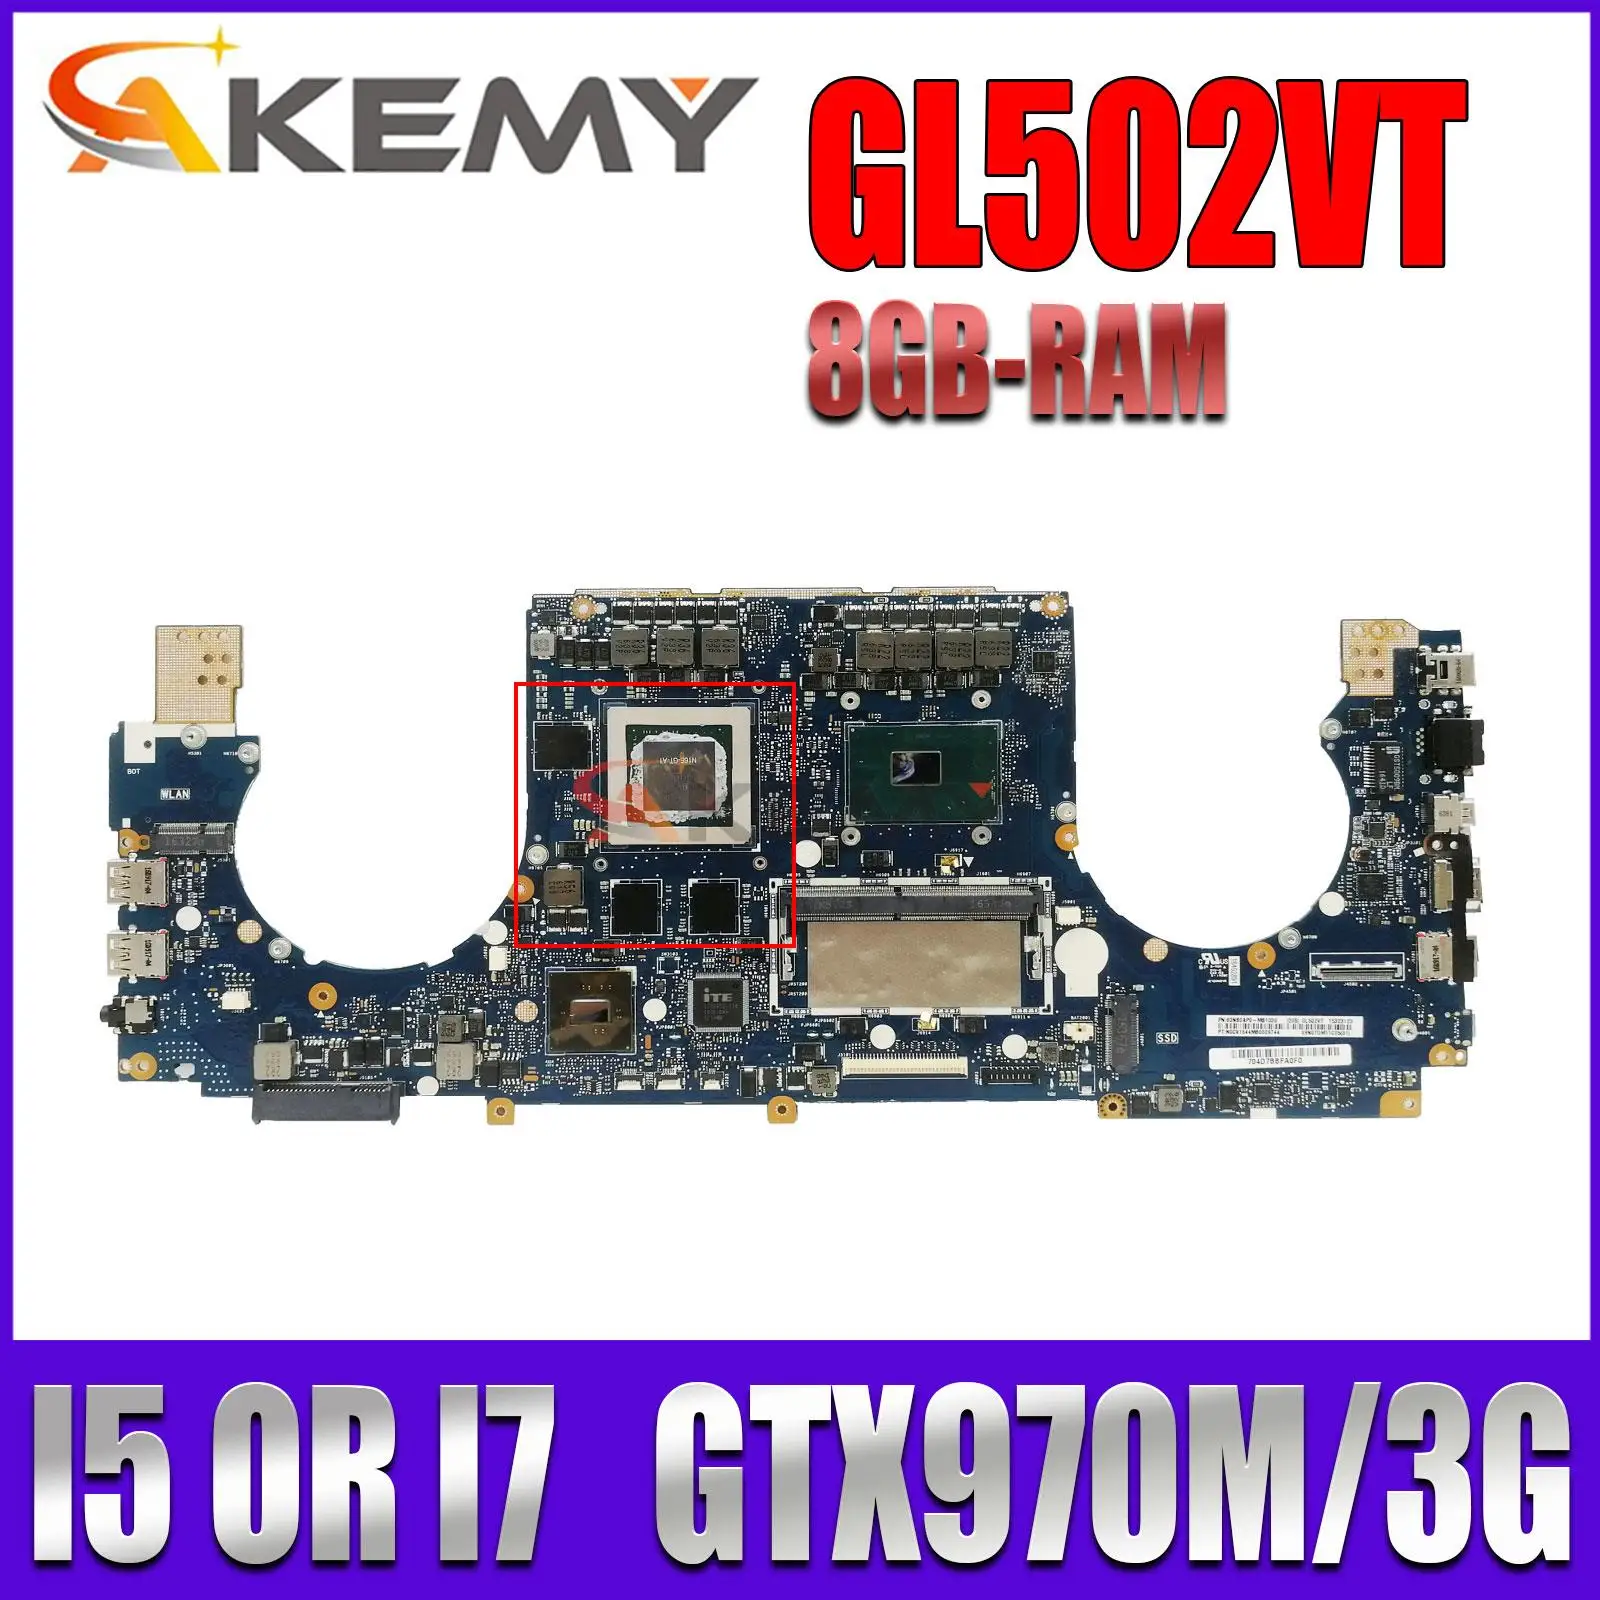 

Mainboard S5VT GL502VT G502VTLaptop Motherboard I5-6300HQ I7-6700HQ GTX970M/3G 8GB-RAM MAIN BOARD TEST OK